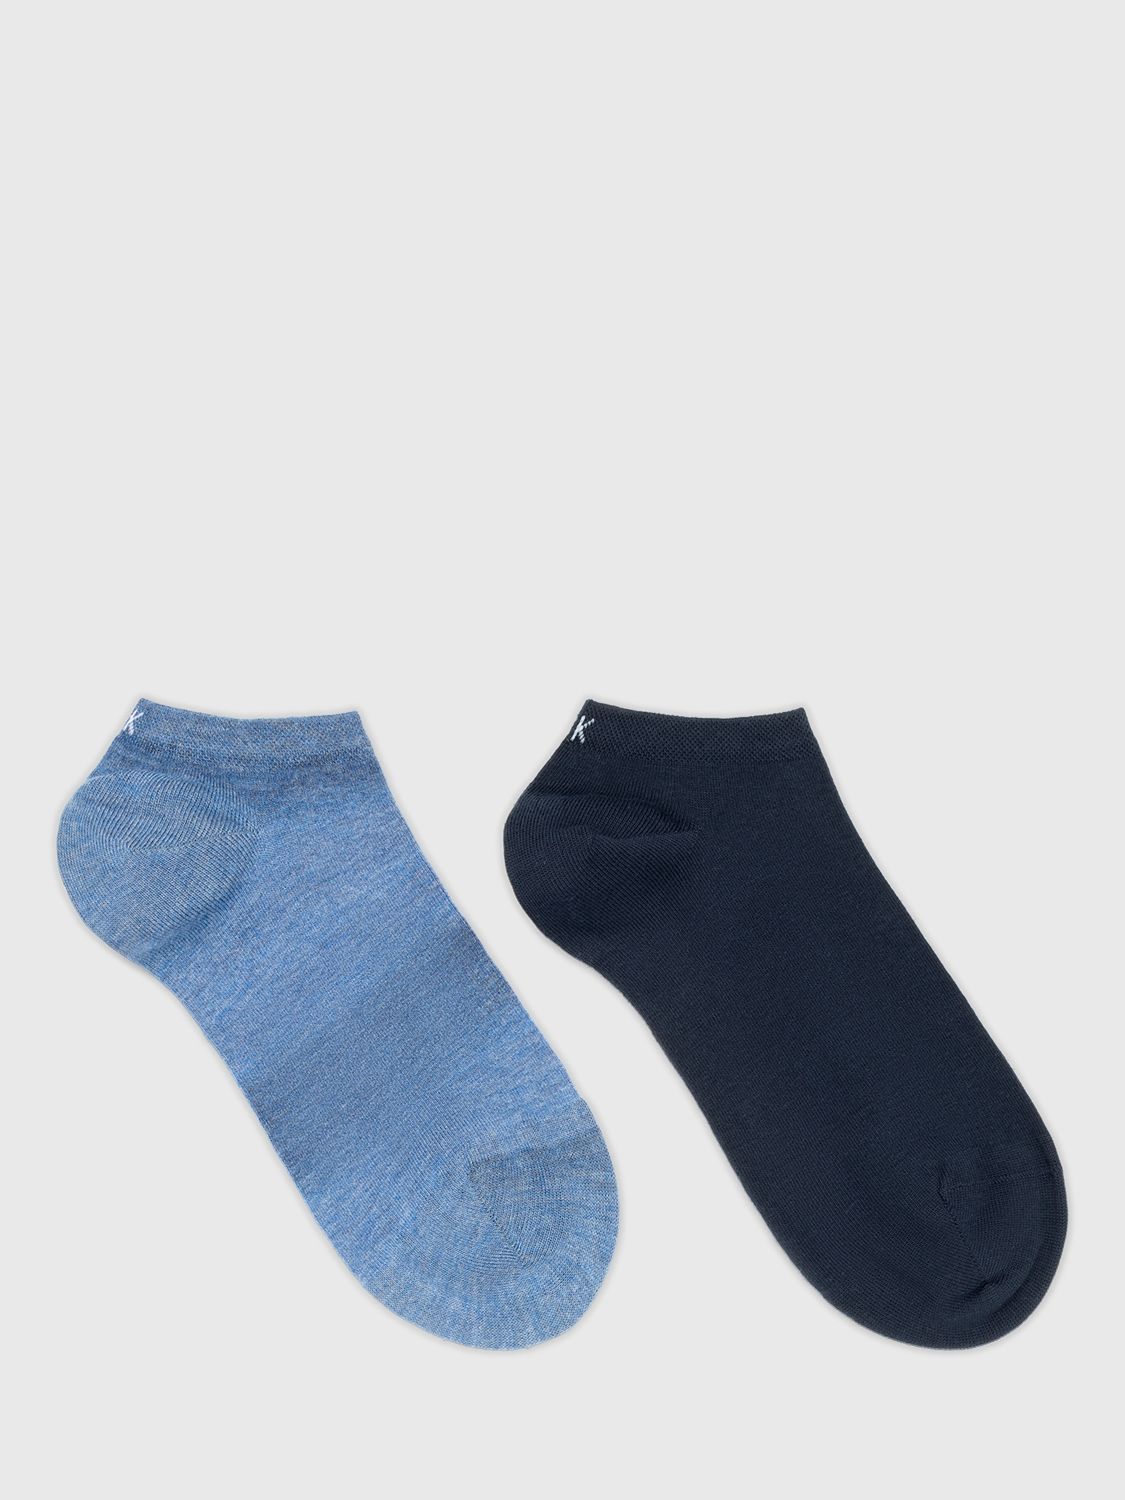 Buy Calvin Klein Trainer Socks, Pack of 2, Blue Online at johnlewis.com